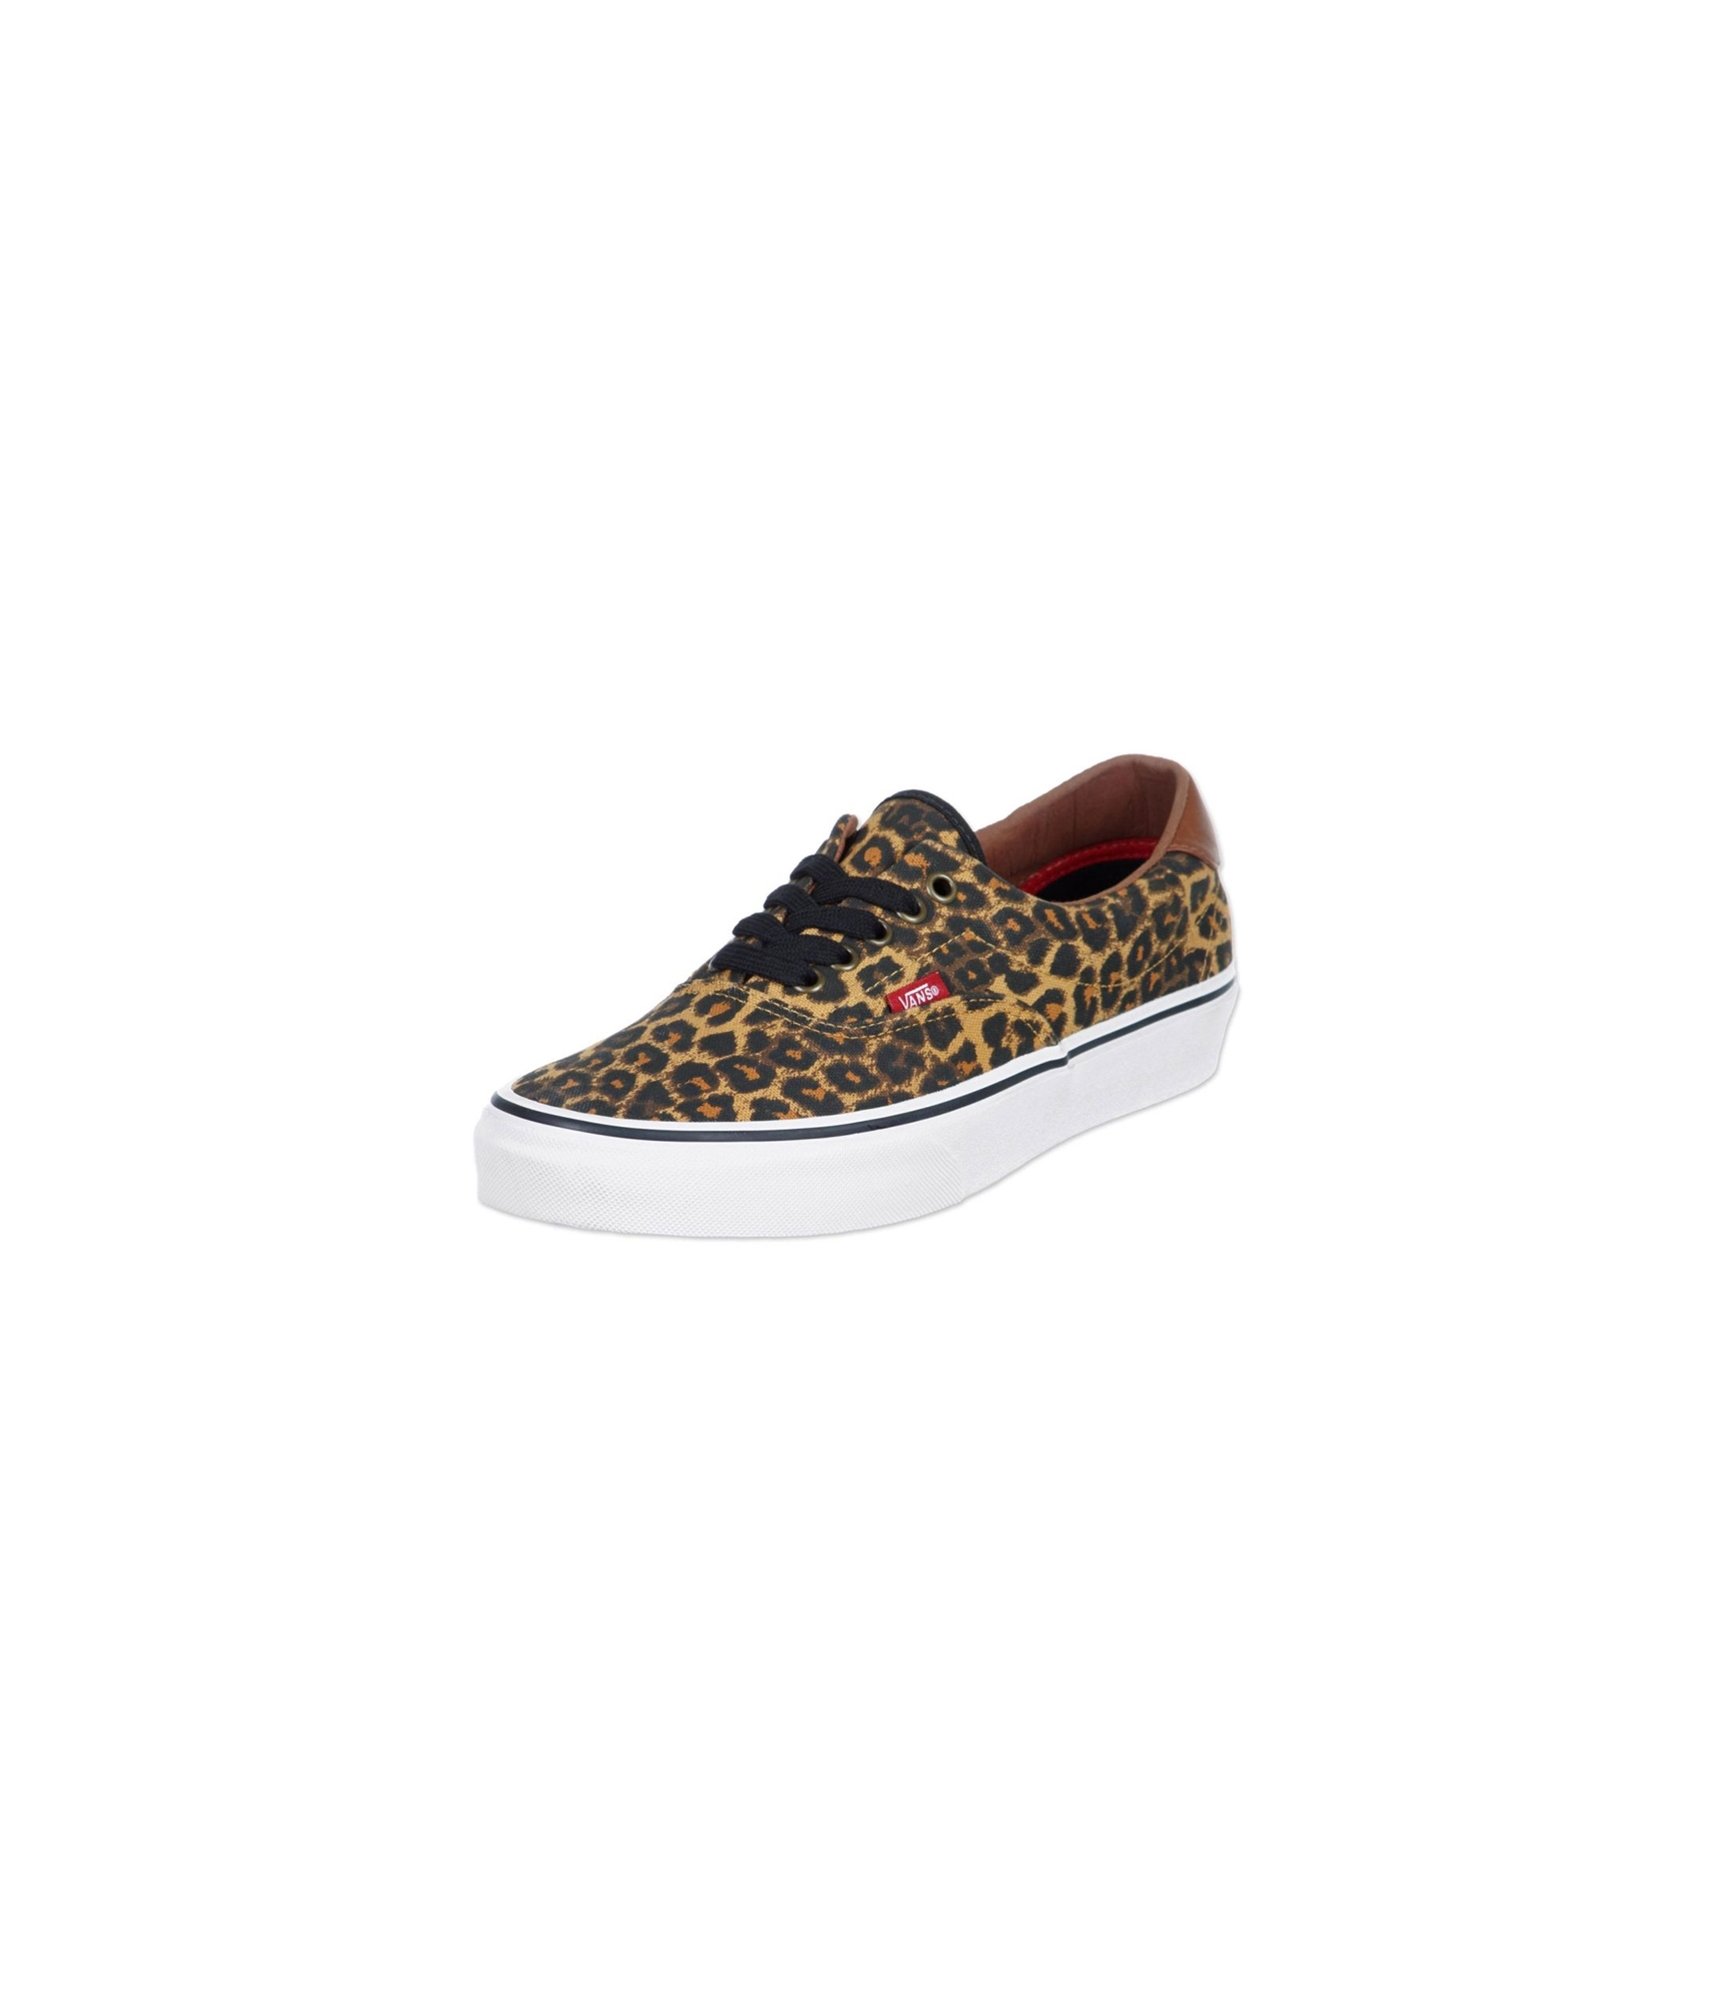 Woning schelp vreugde Buy a Mens Vans Era 59 Leopard Sneakers Online | TagsWeekly.com